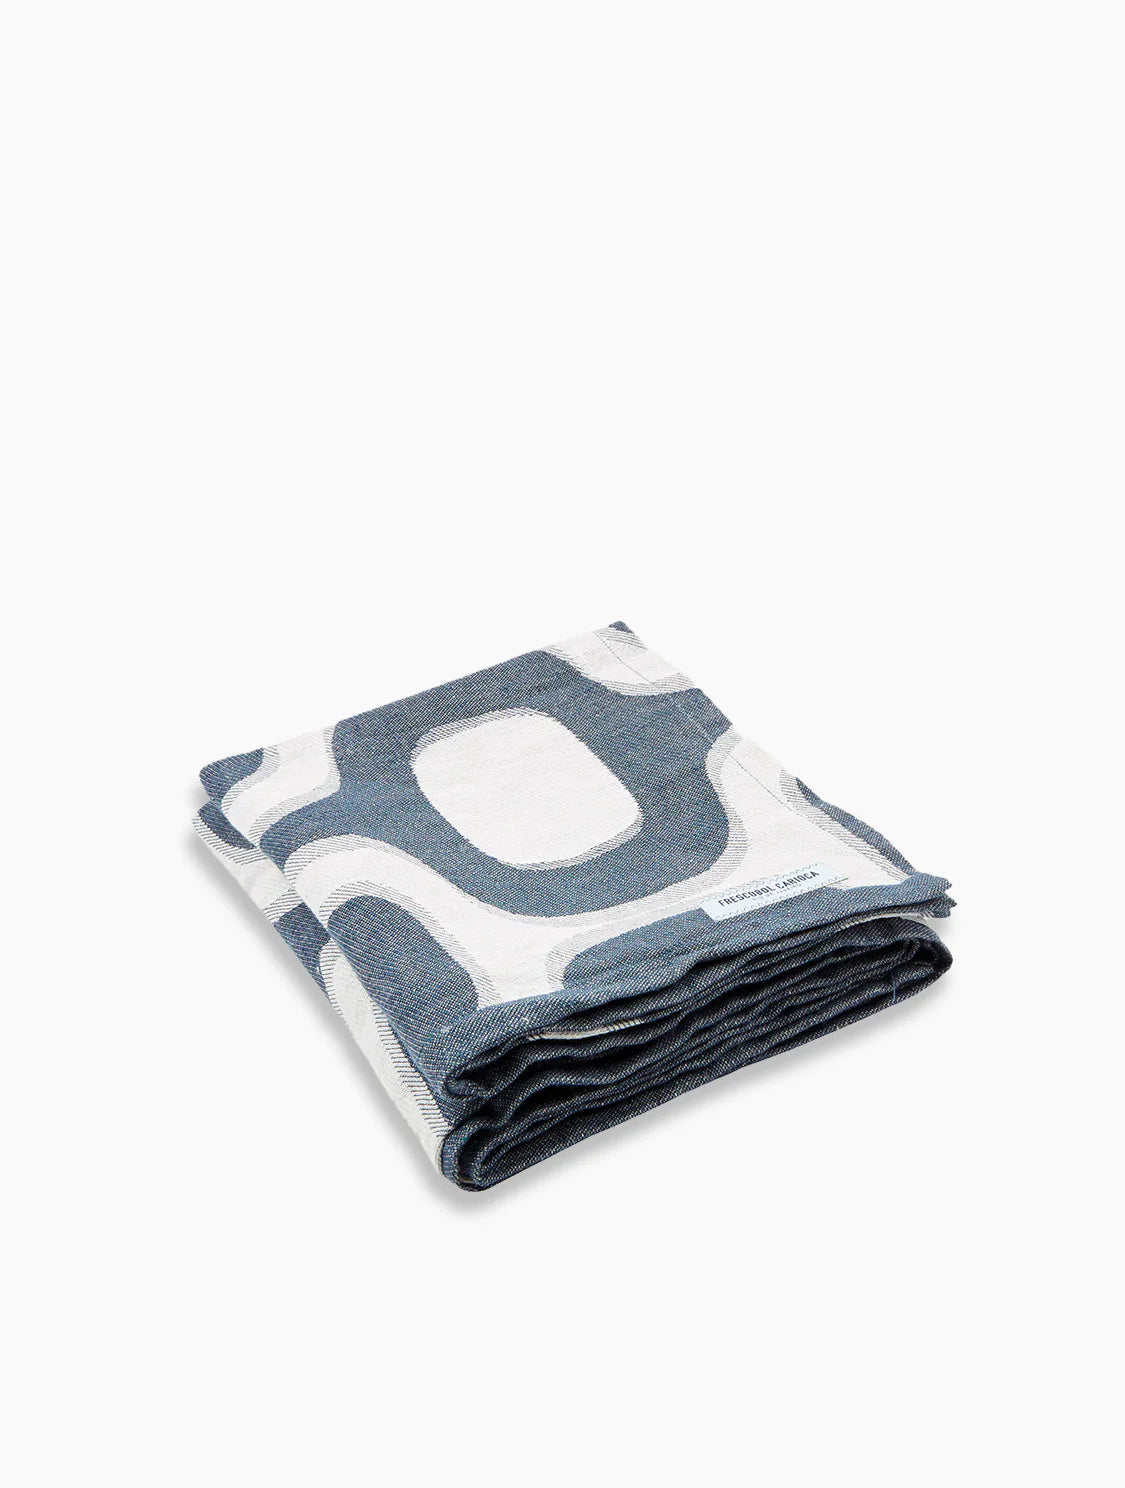 Cotton/Linen Towel - Jacquard Ipanema Nevoa Navy Blue - Cigale &  Fourmi